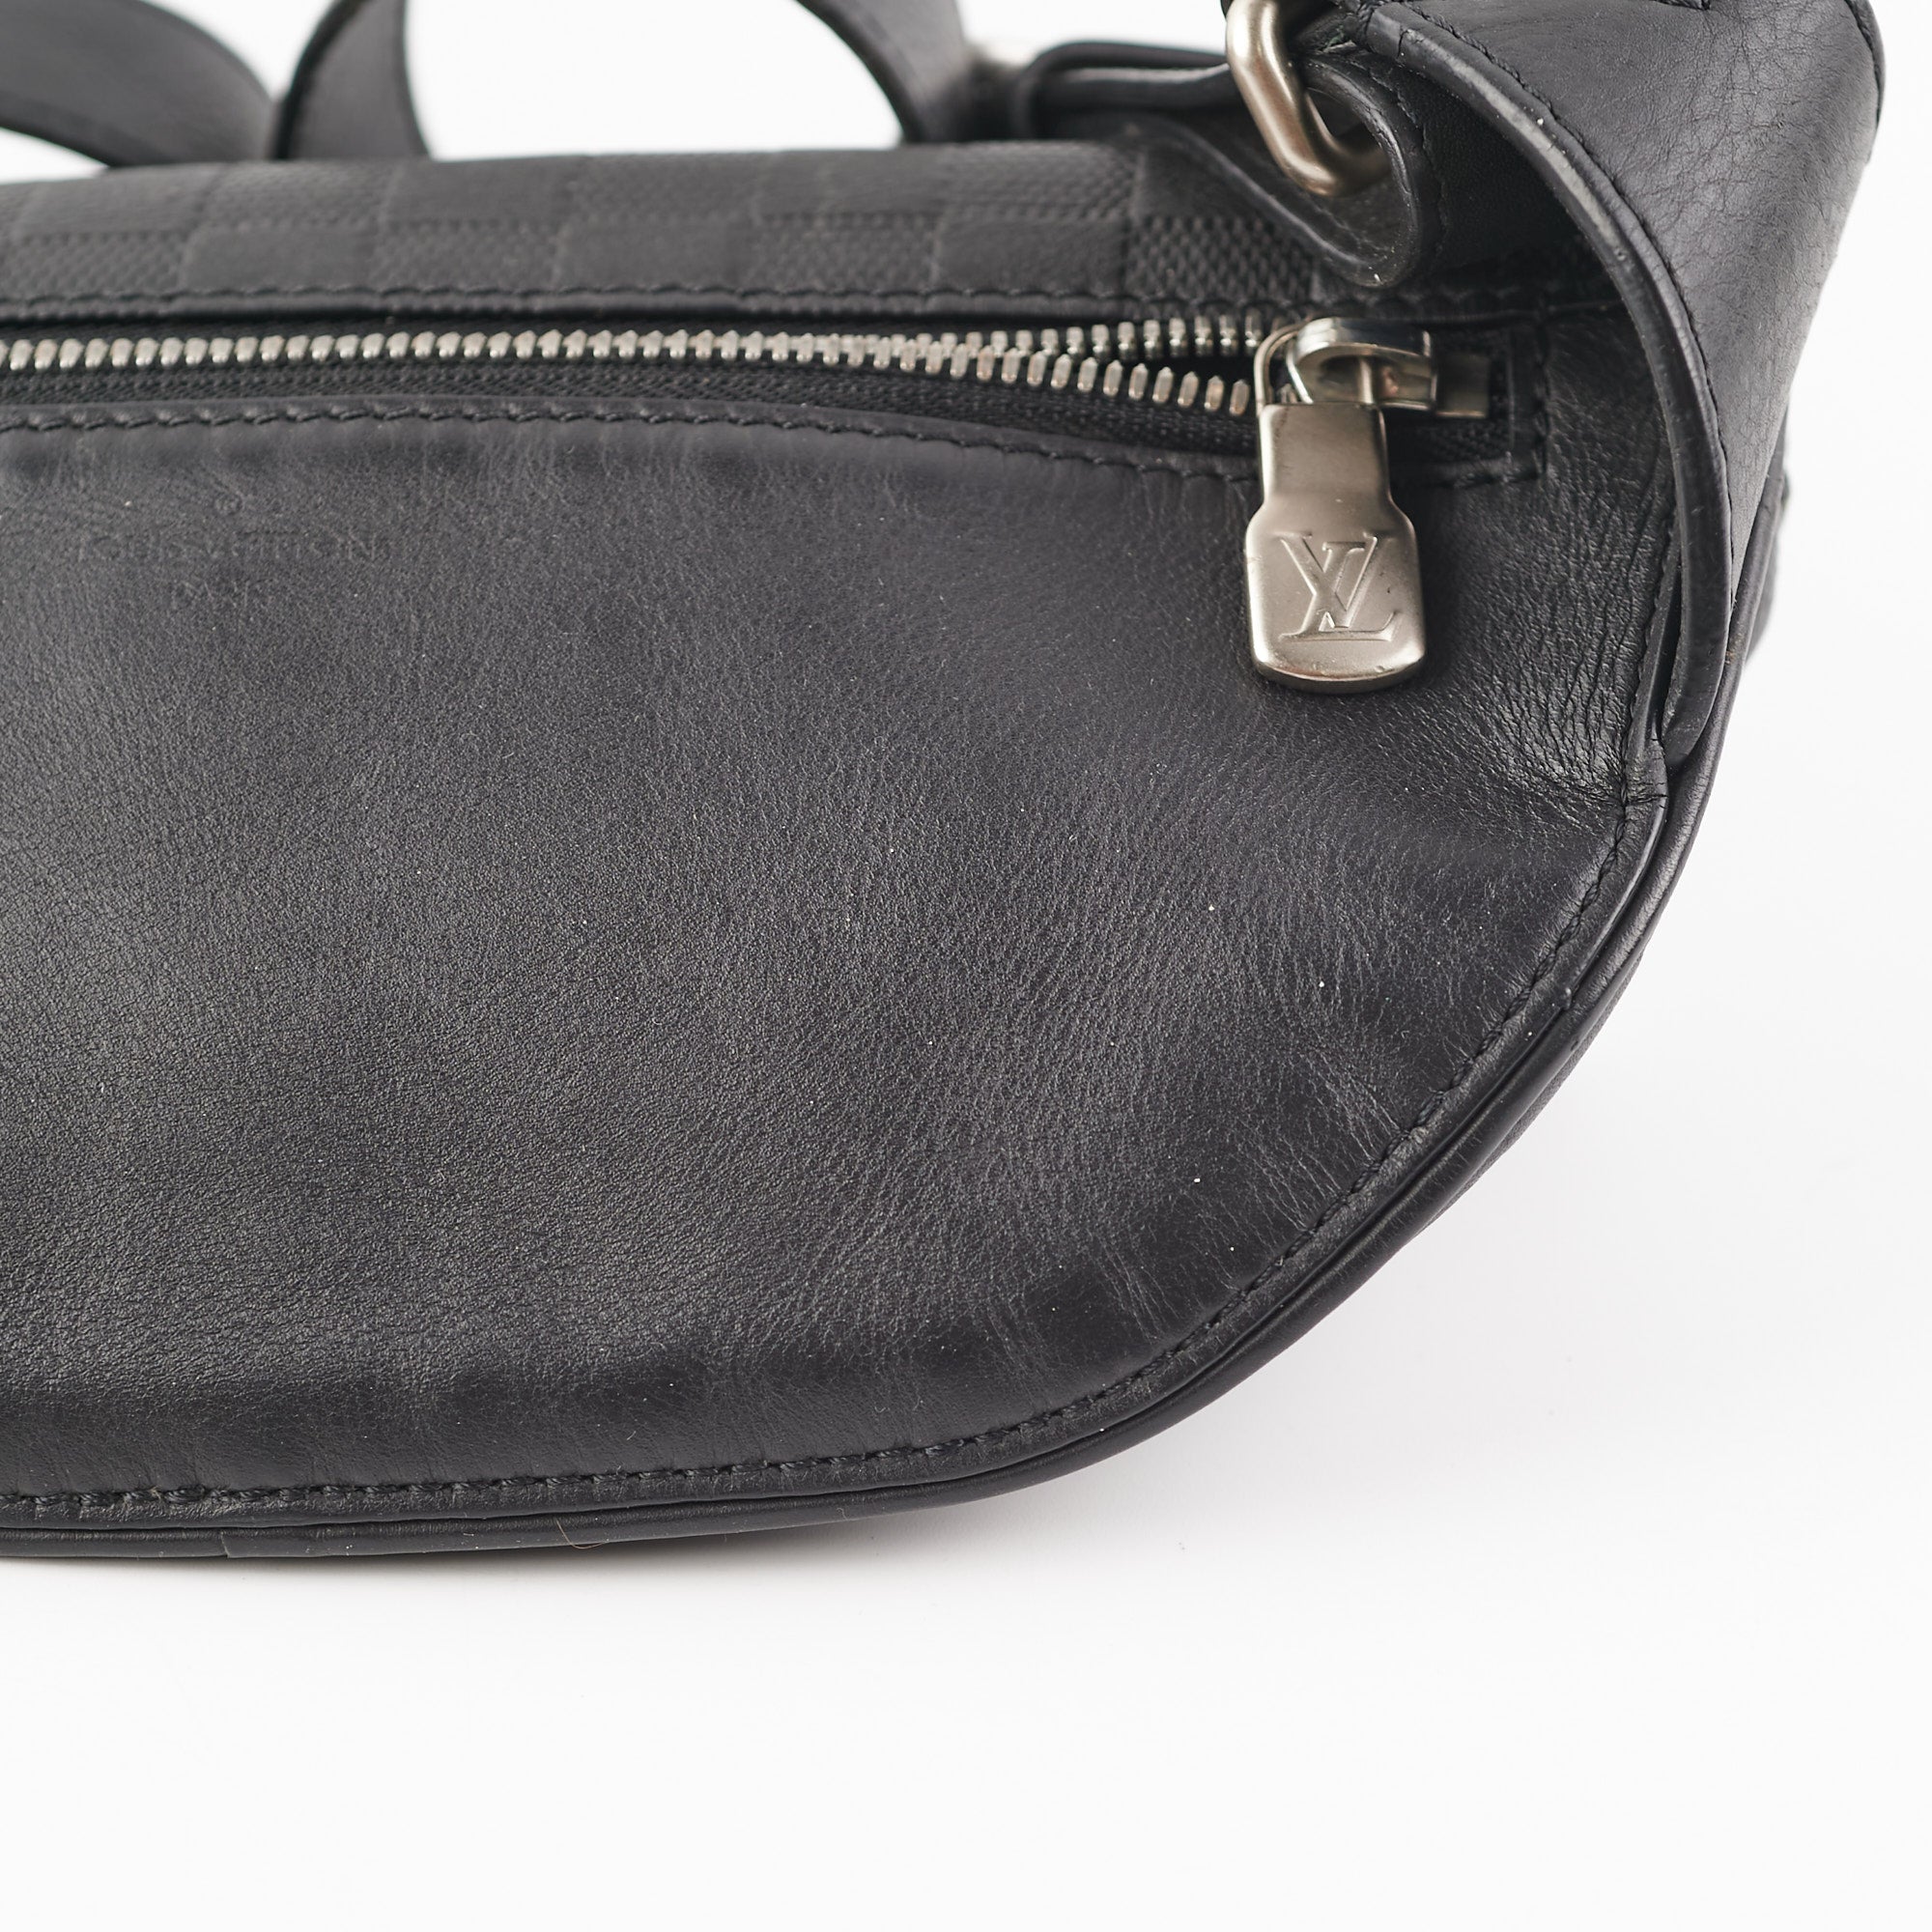 Louis+Vuitton+Campus+Bumbag+Black+Leather for sale online